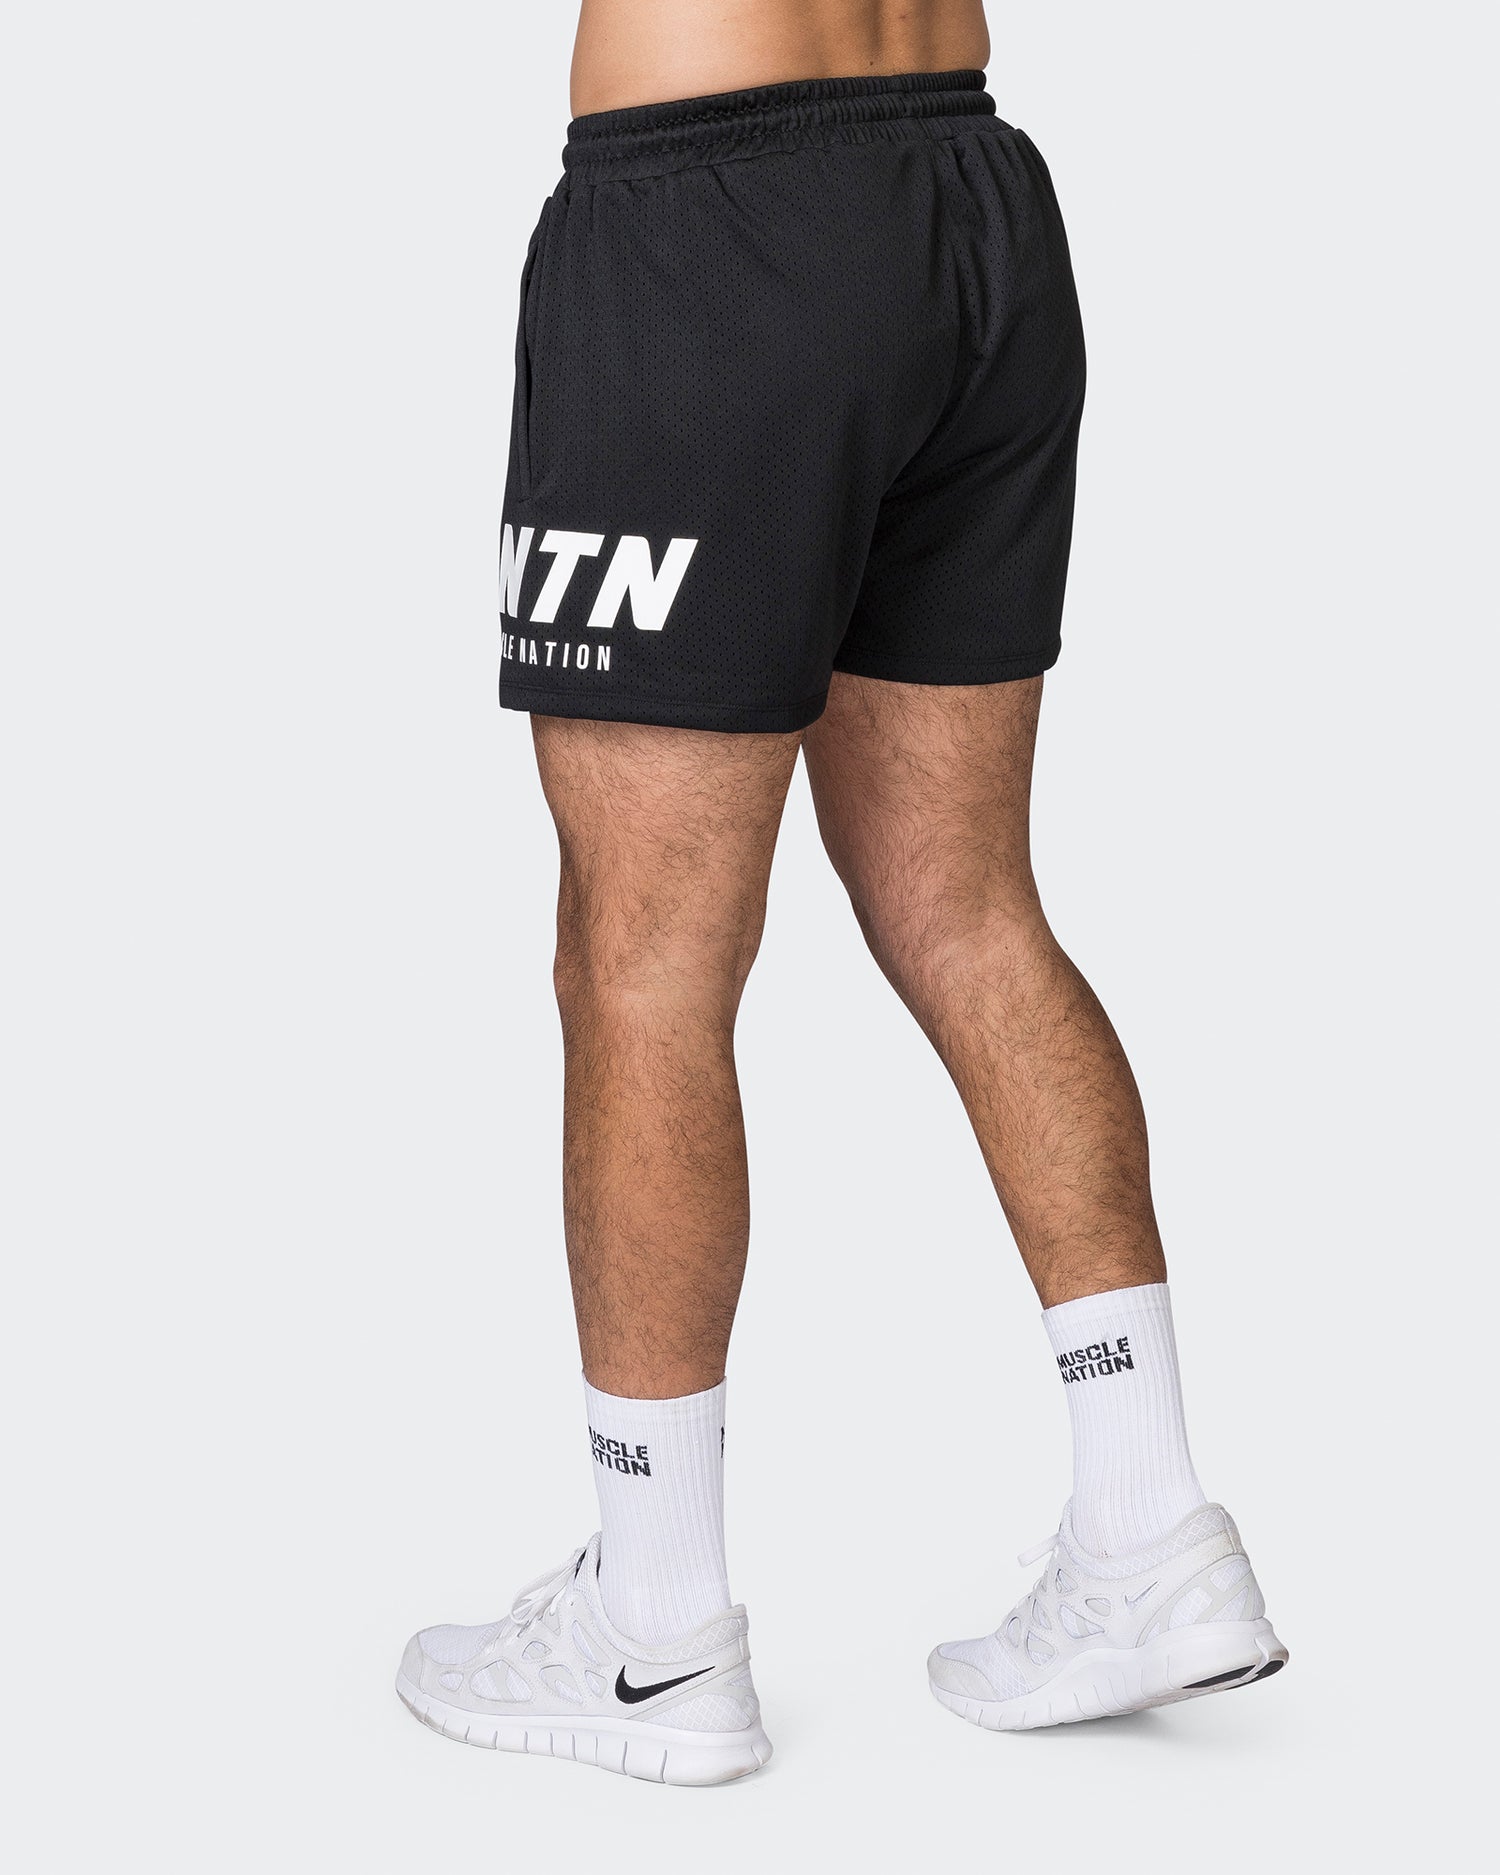 MNTN Lay Up 3.5" Shorts - Black